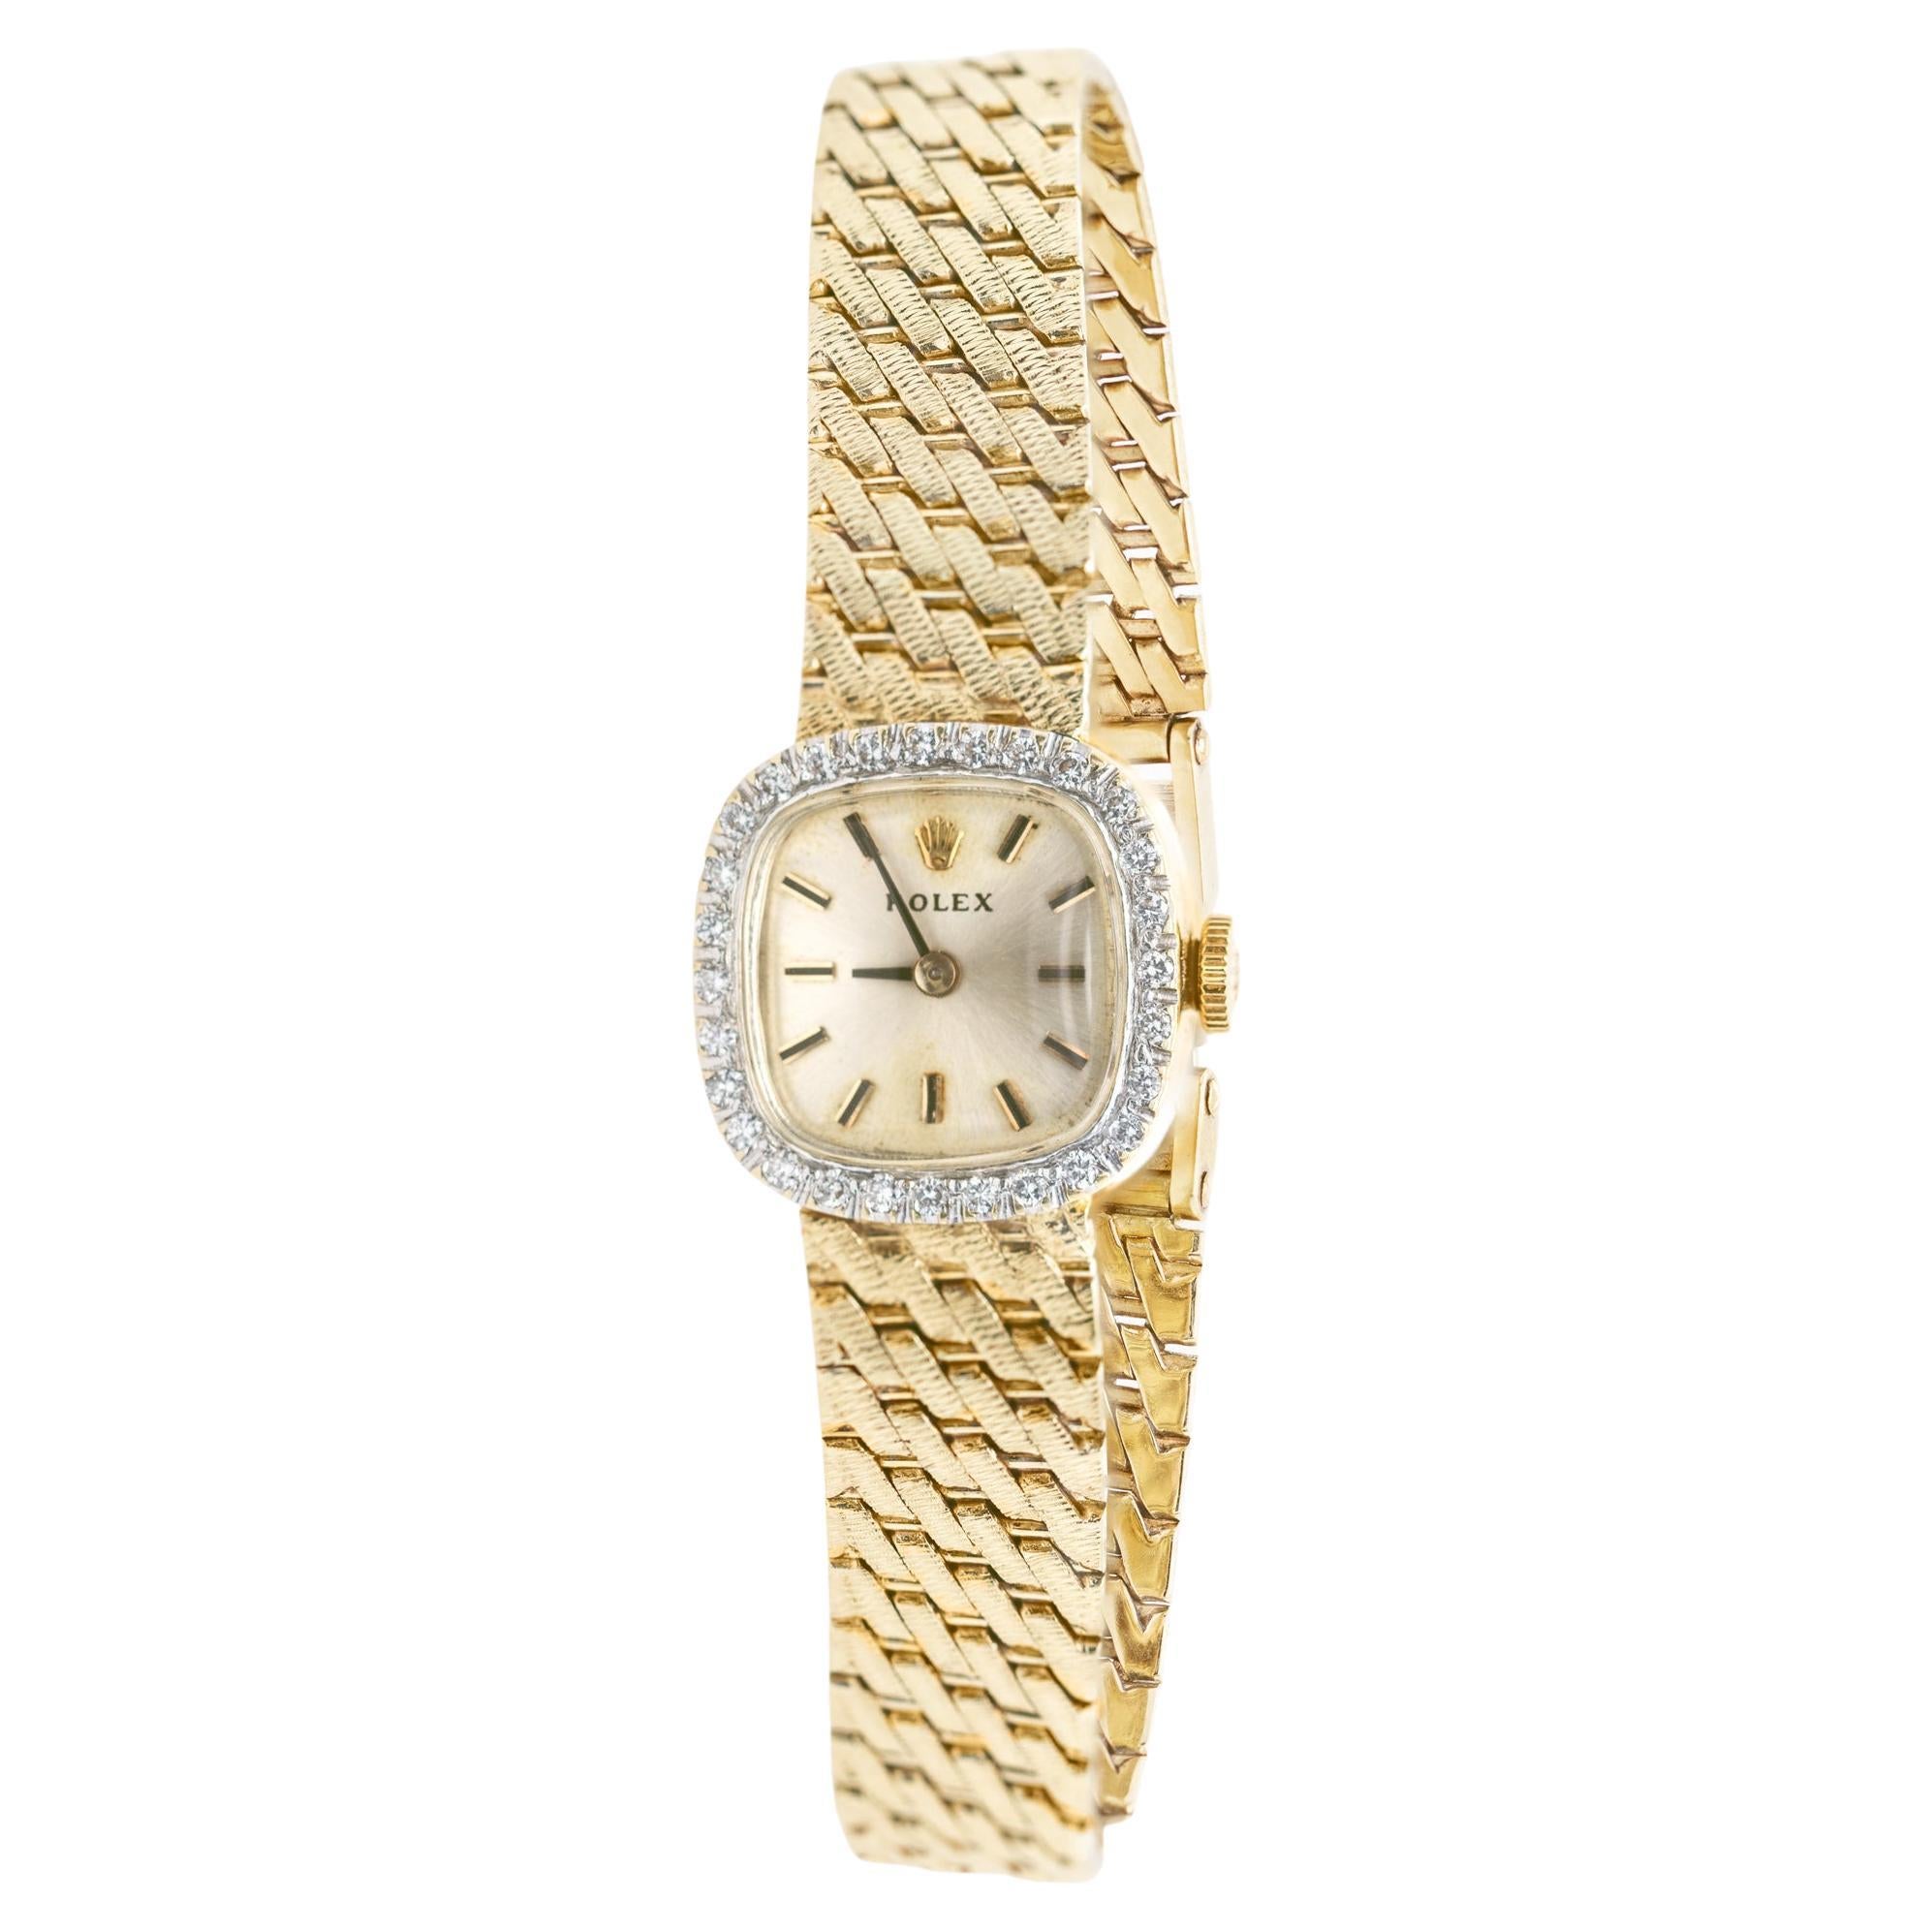 Rolex 14k Yellow Gold Factory Diamond Bezel Vintage Cocktail Ladies Watch